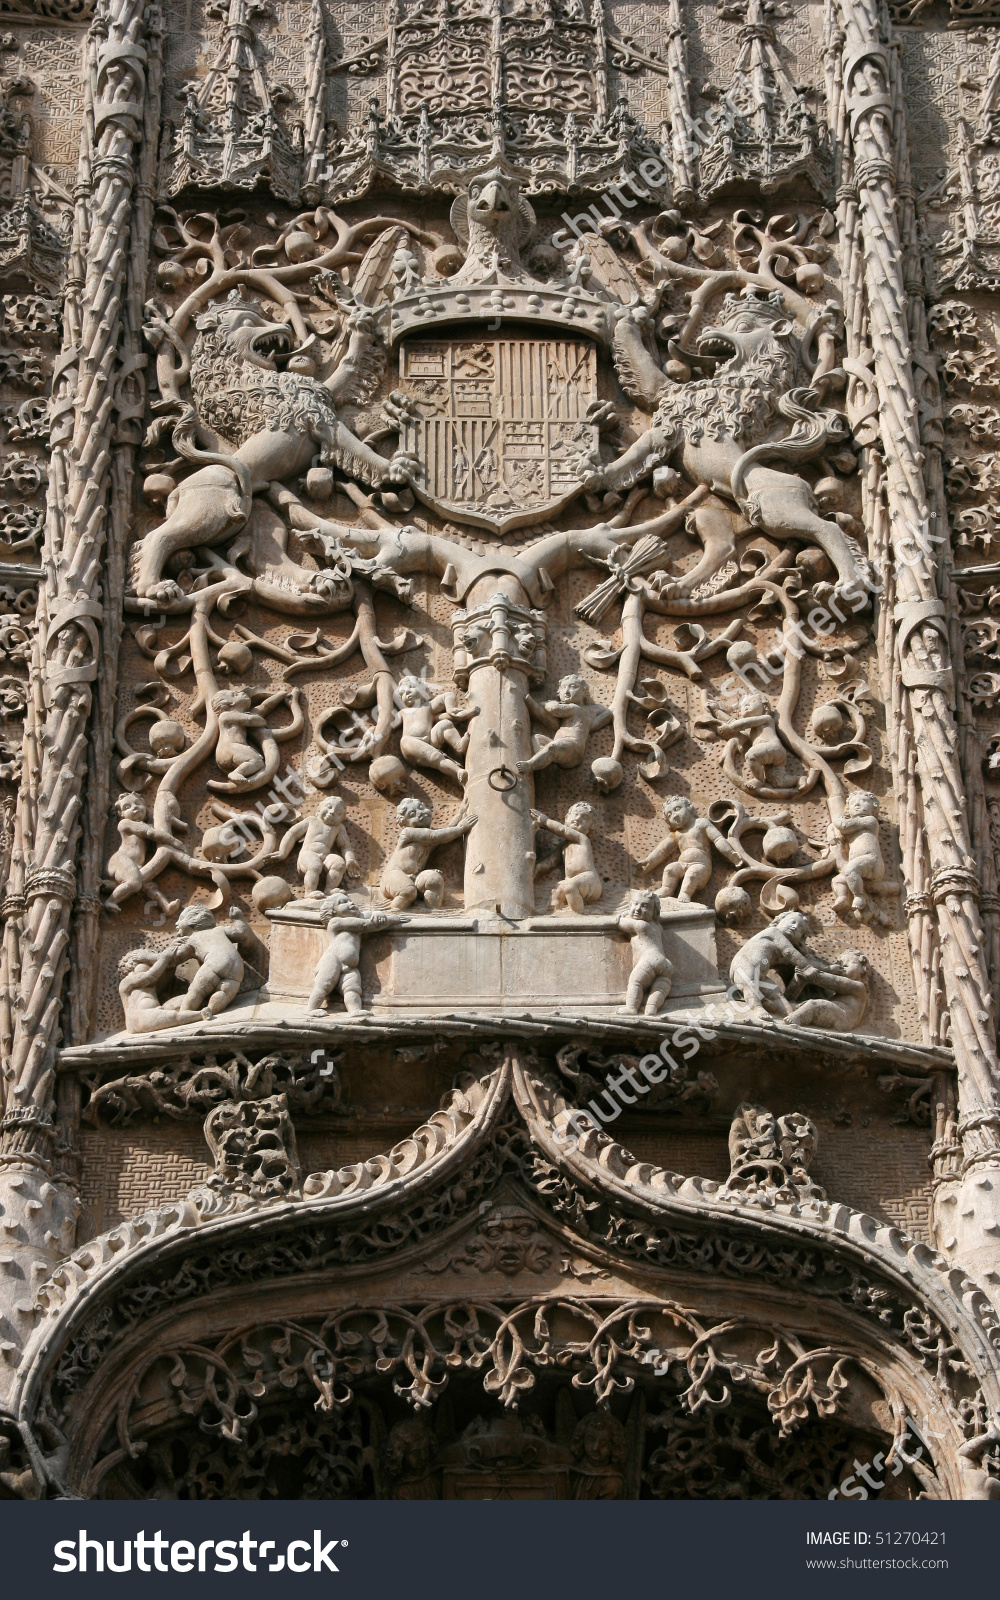 Famous Ornate Plateresque Facade Of Colegio De San Gregorio.